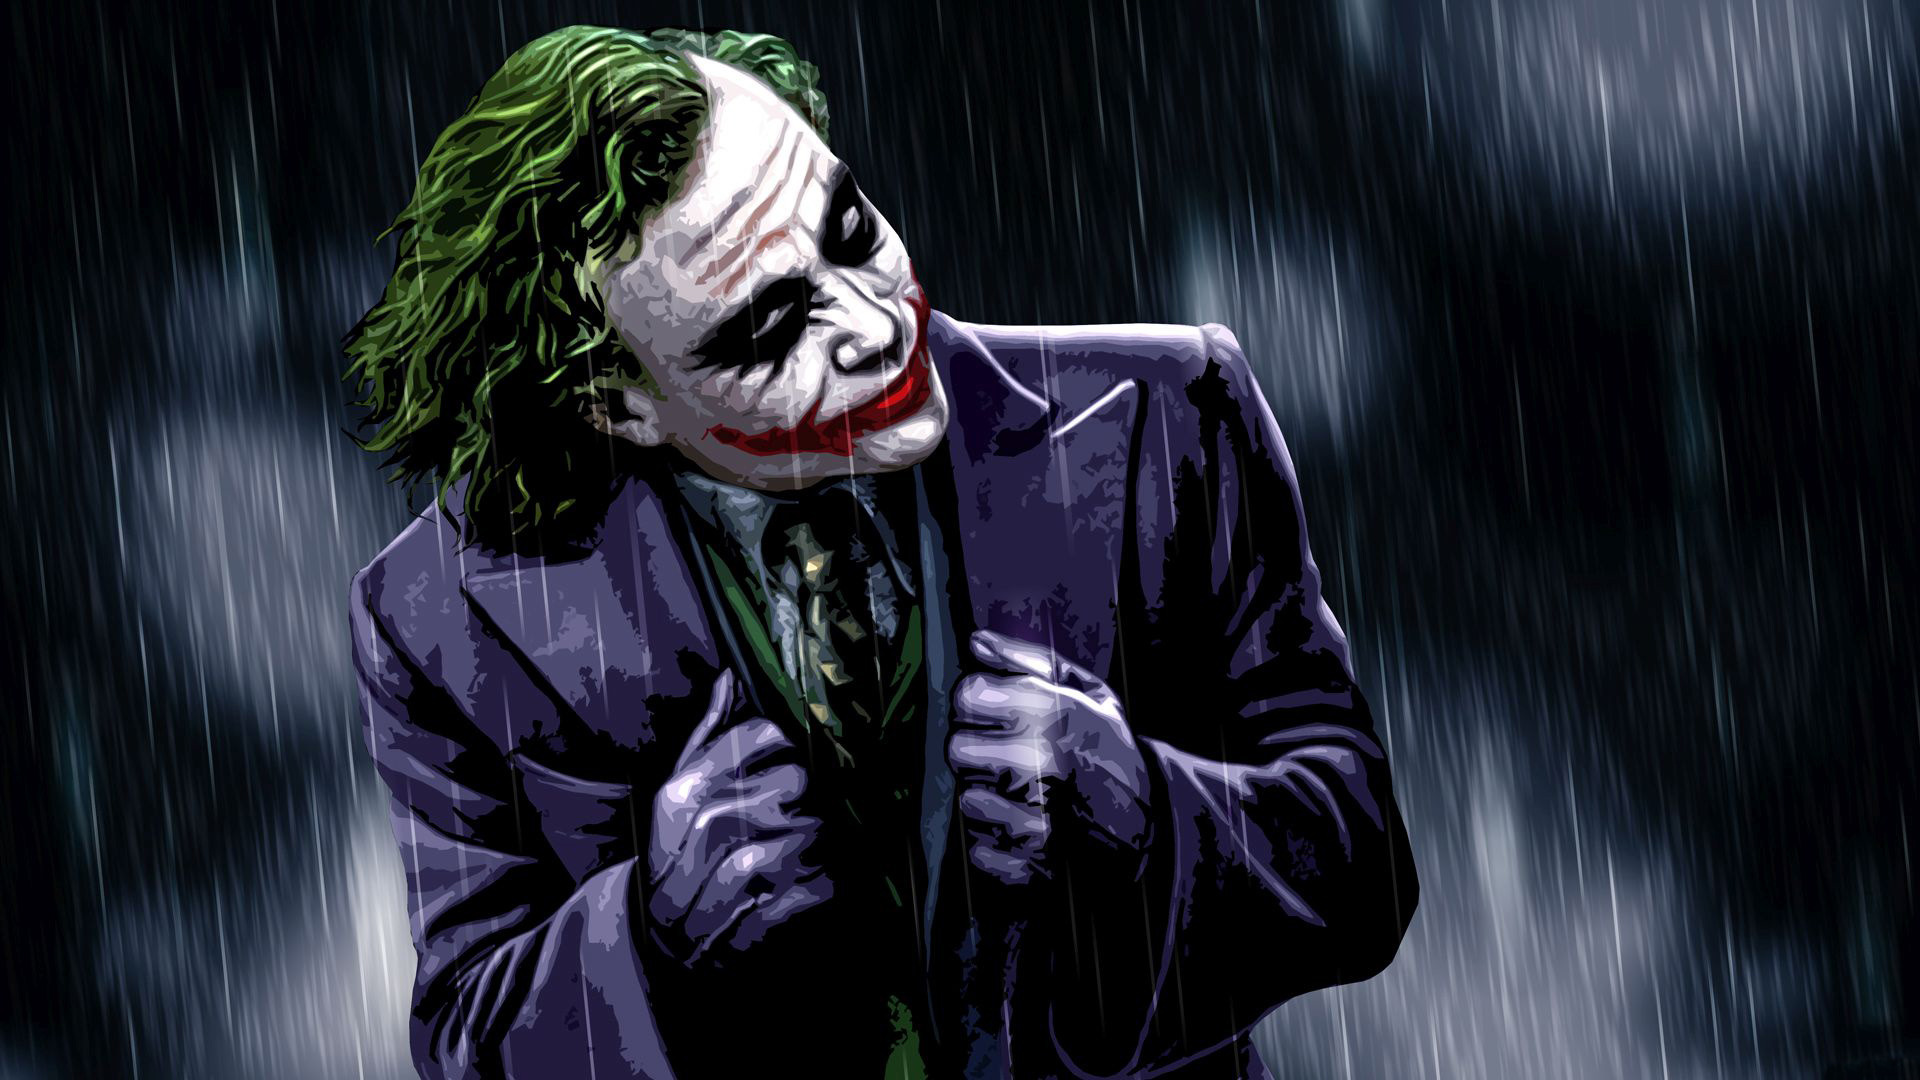 10. The Joker's blonde hair in the film "Batman: The Dark Knight" - wide 6